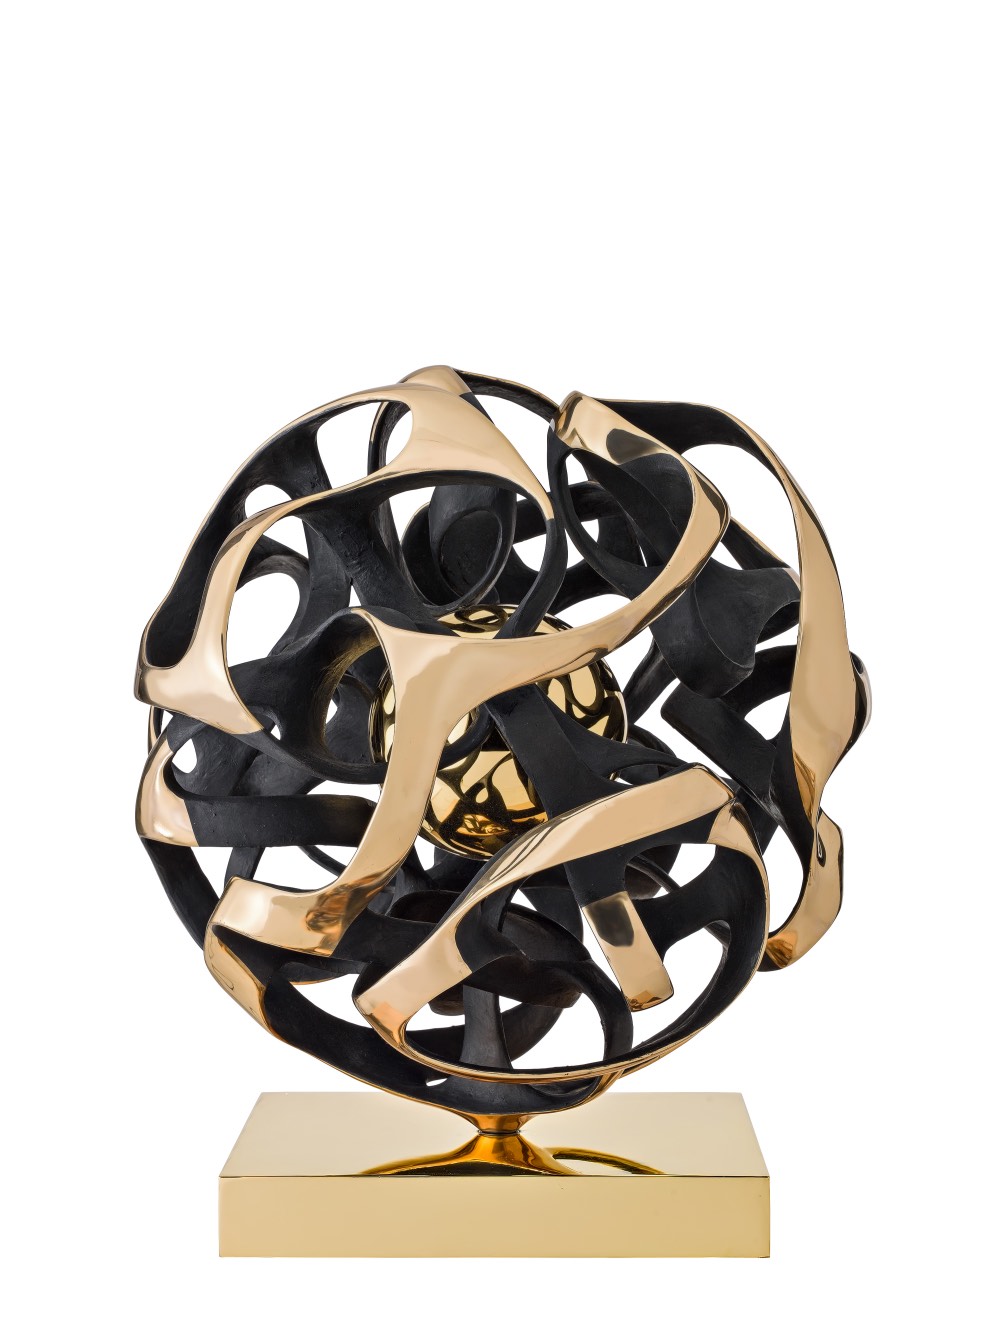 sfera-globo-sphere-globe-scultura-sculpture